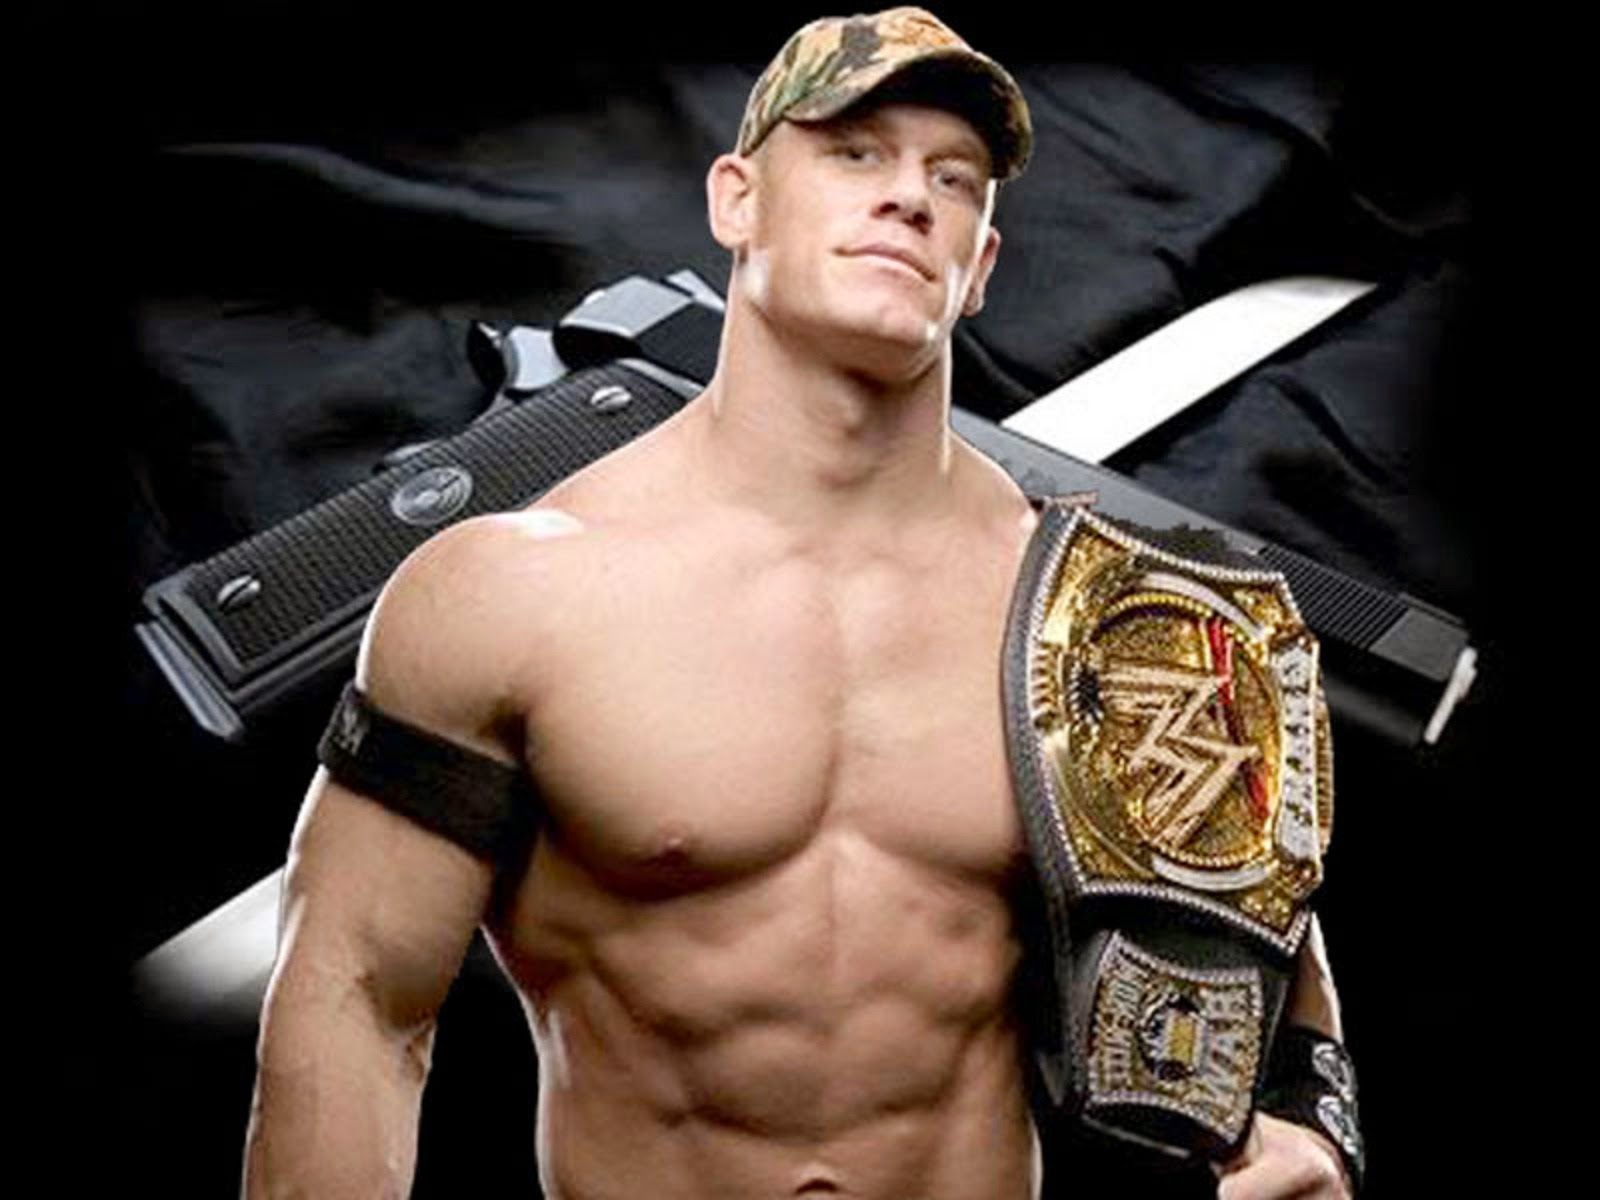 John Cena Hd Free Wallpapers - John Cena Image Download Hd - 1600x1200  Wallpaper 